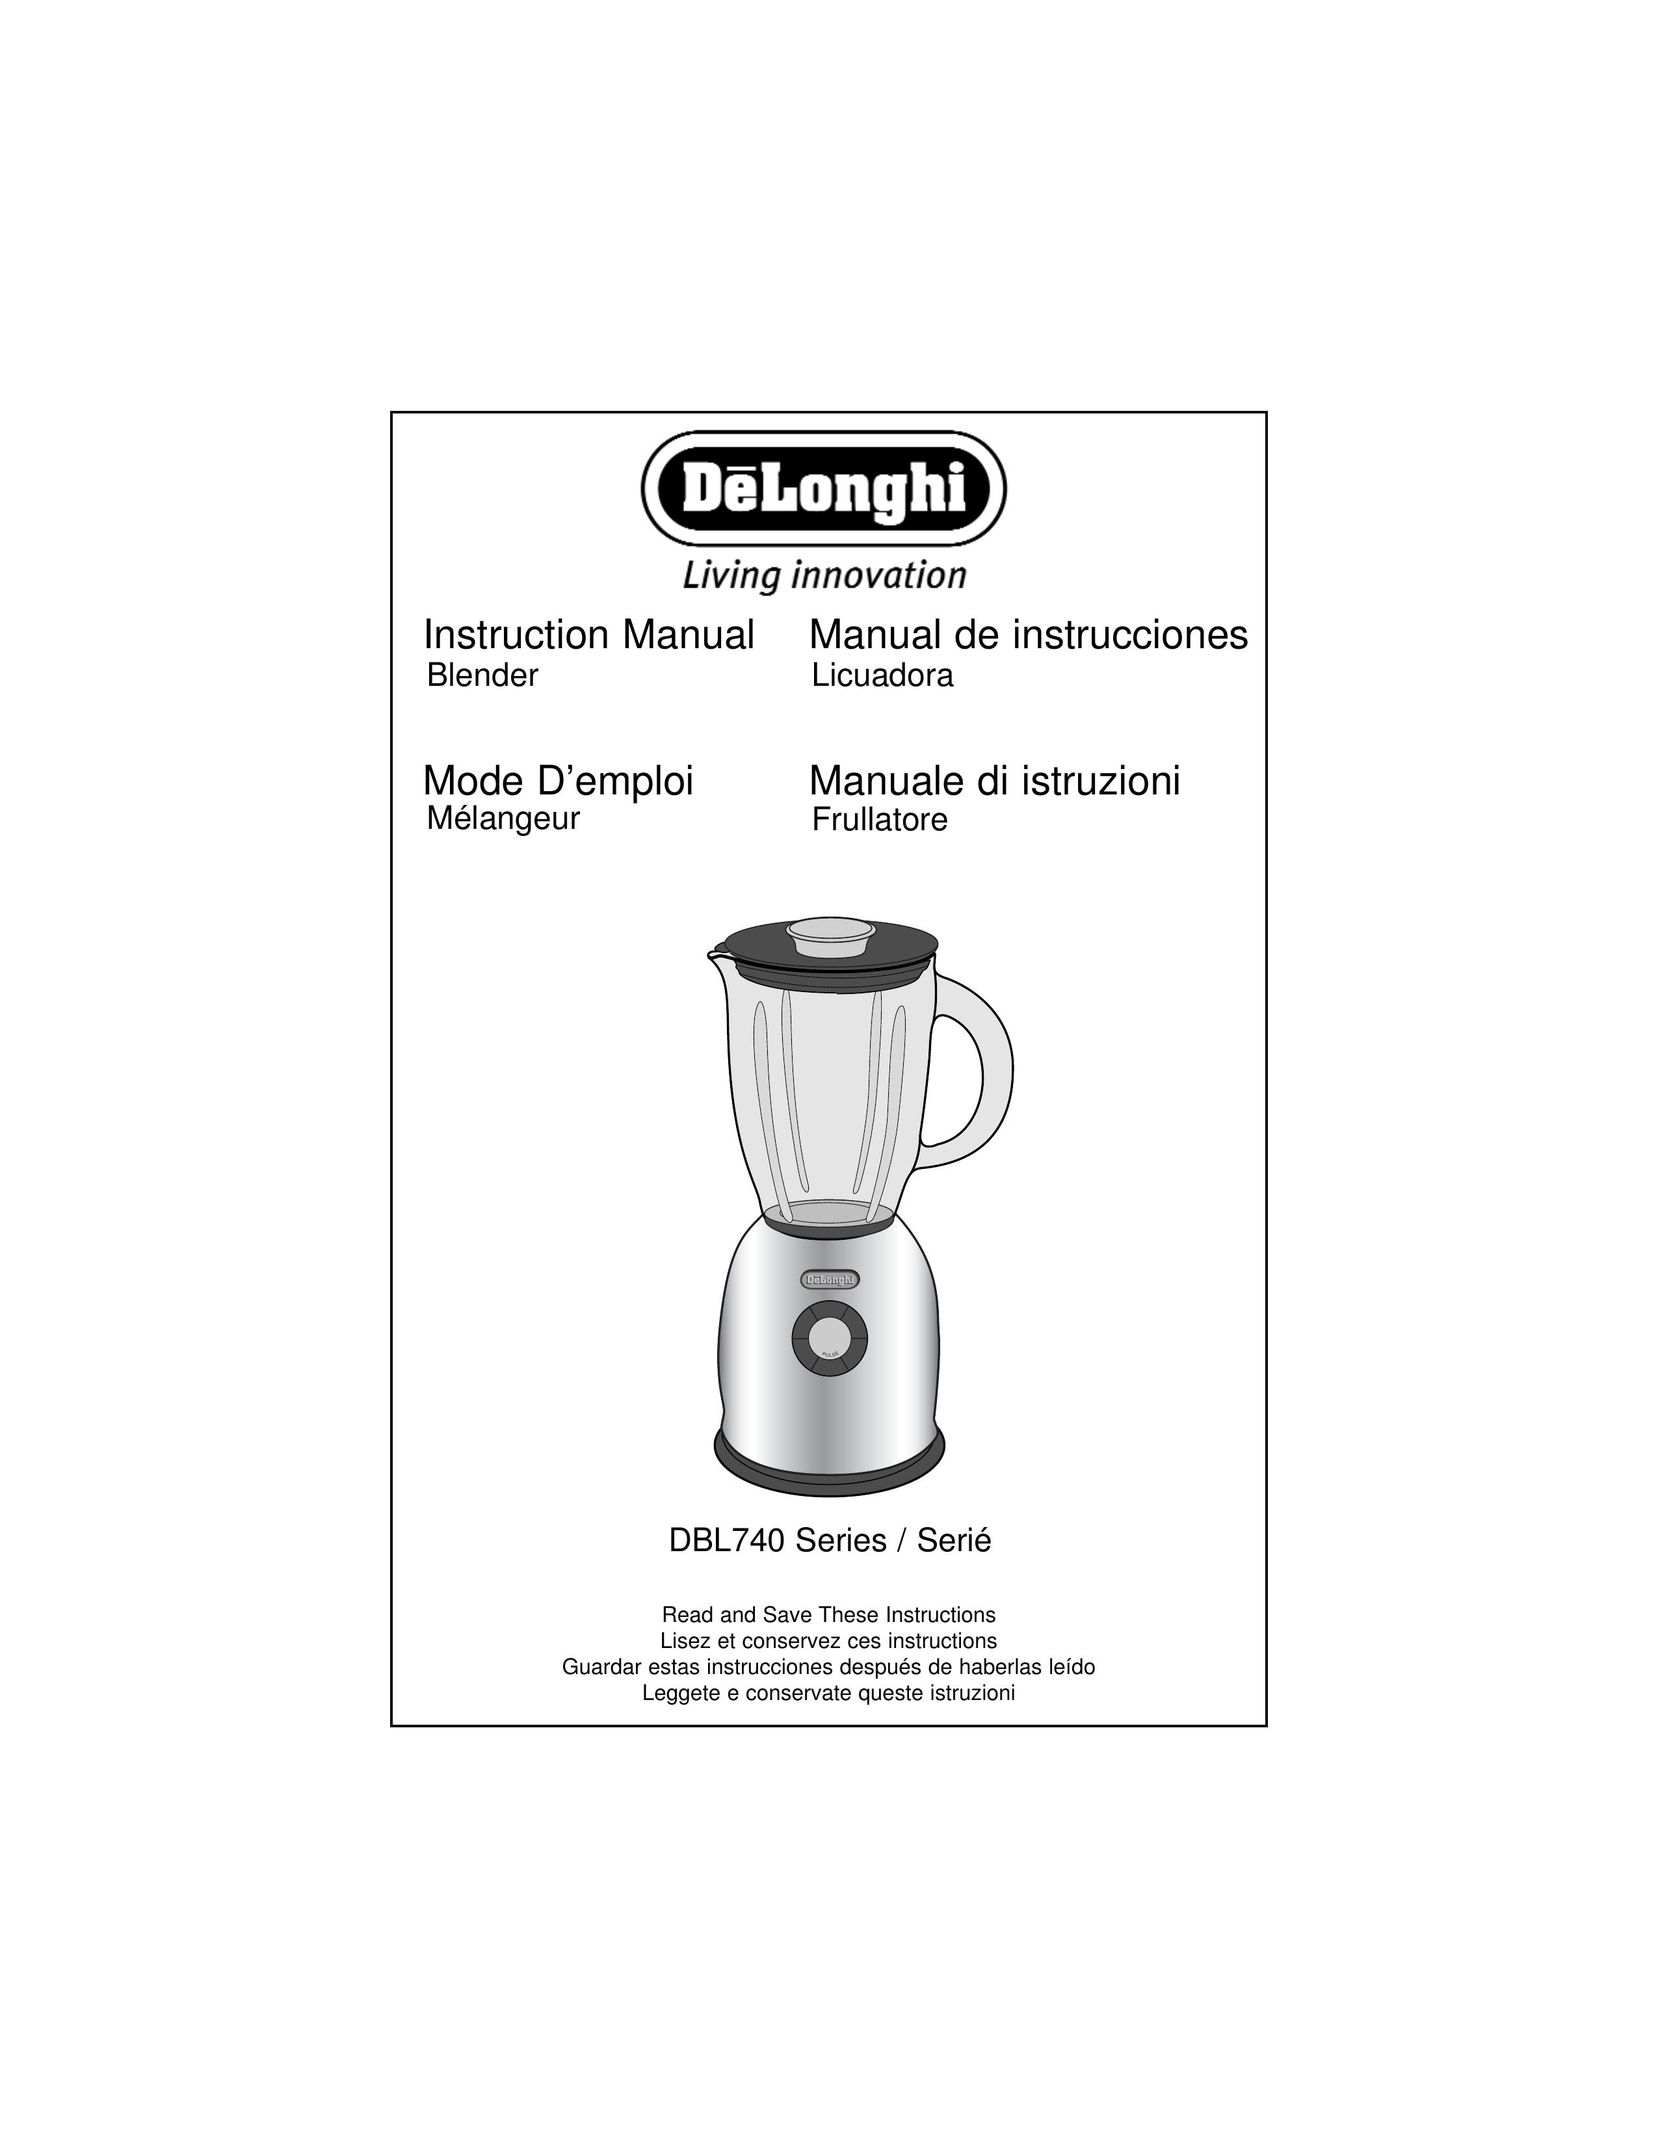 DeLonghi DBL740 Series Blender User Manual